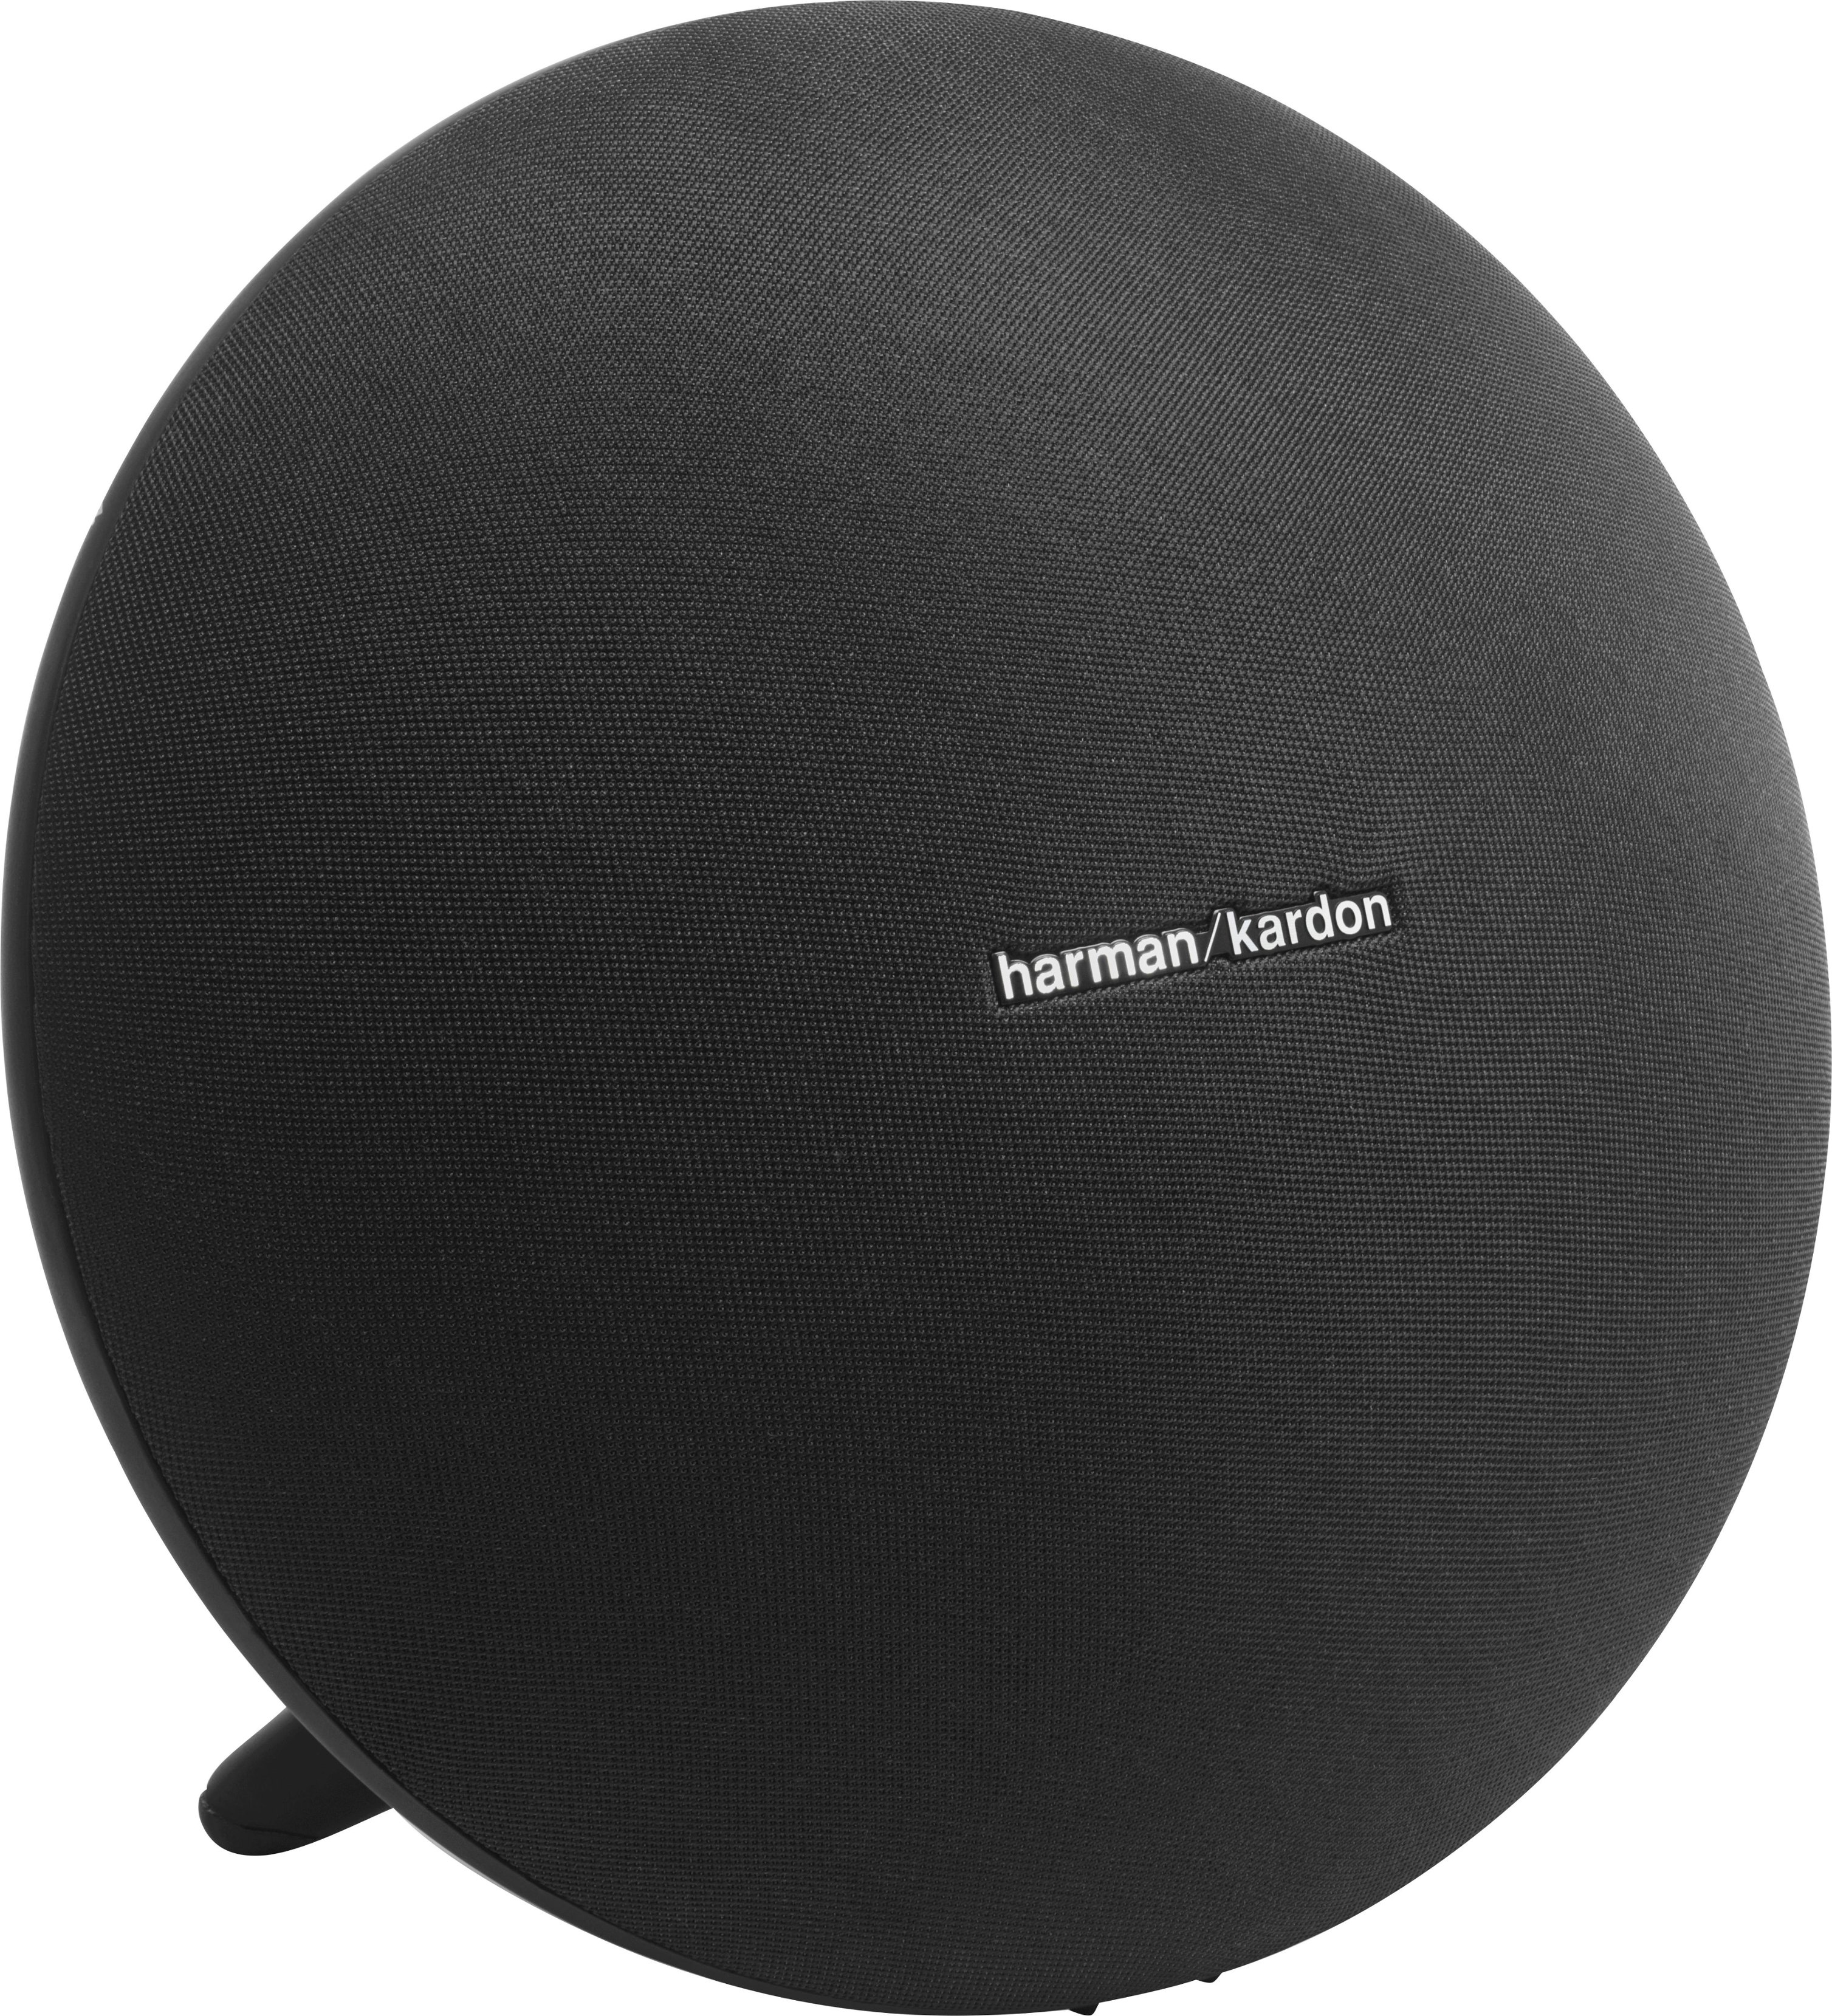 Best Buy: 4 Black harman/kardon Studio HKOS4BLKAM Portable Onyx Speaker Bluetooth